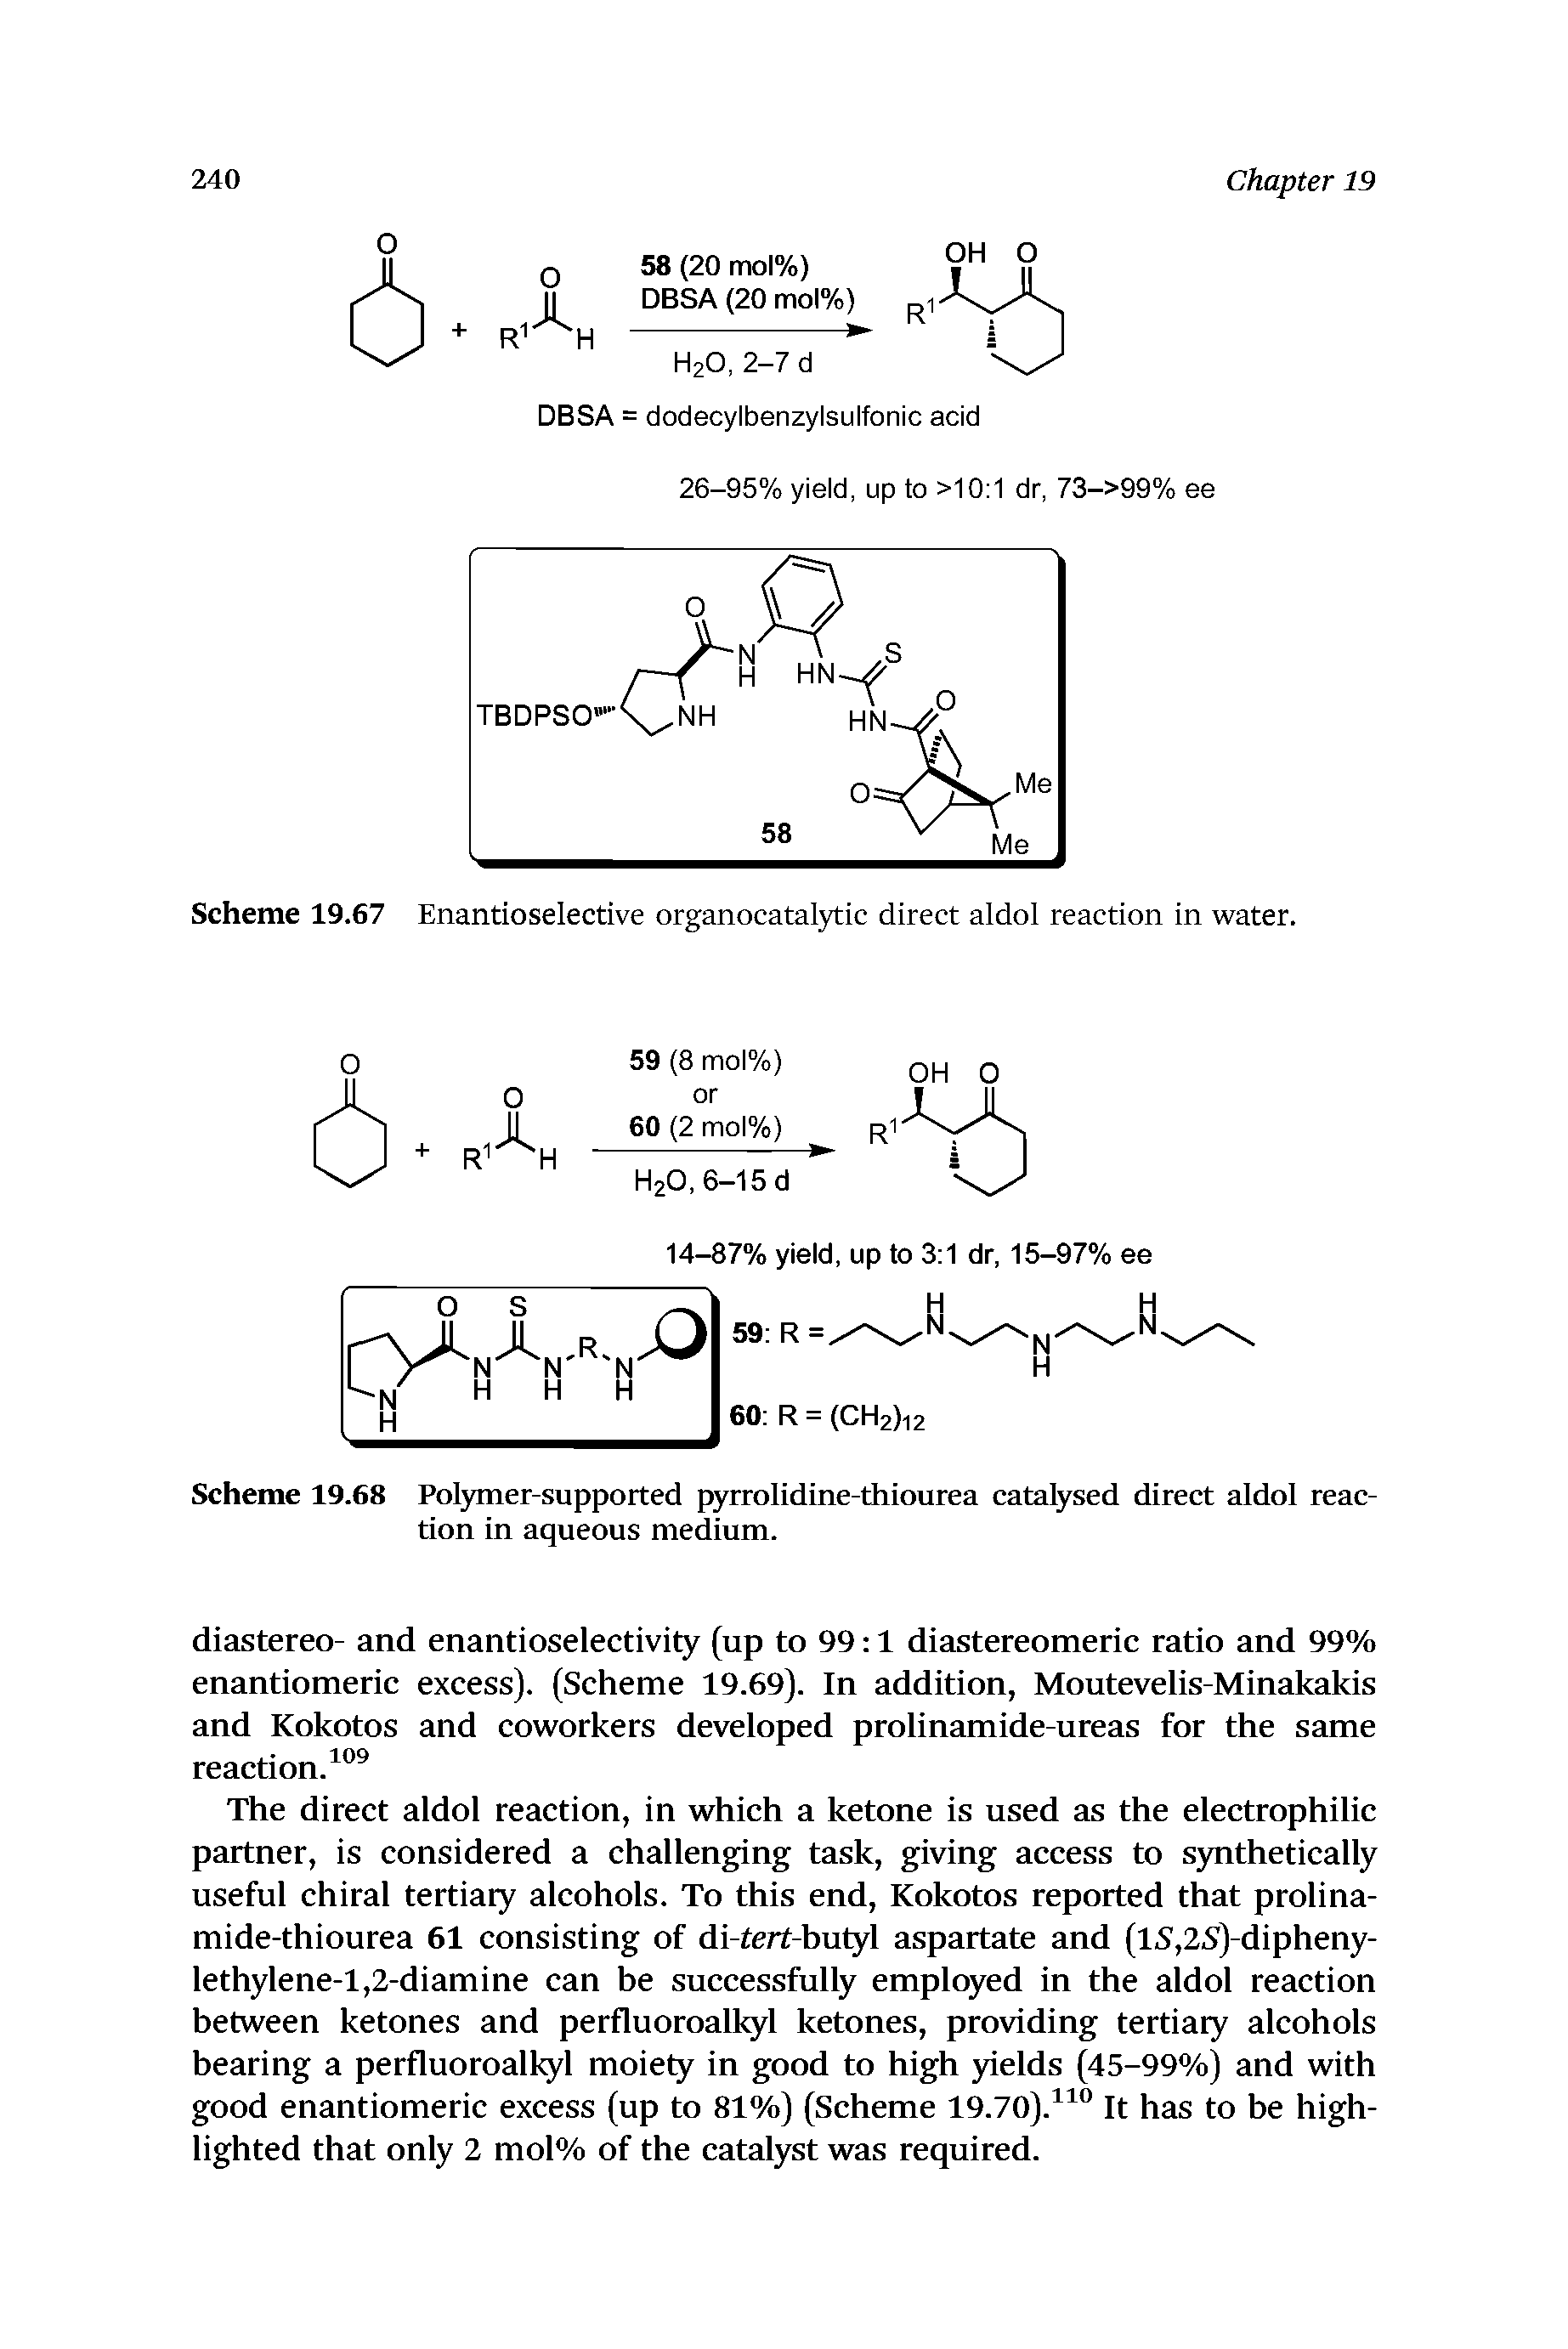 Scheme 19.68 Polymer-supported pyrrolidine-thiourea catalysed direct aldol reaction in aqueous medium.